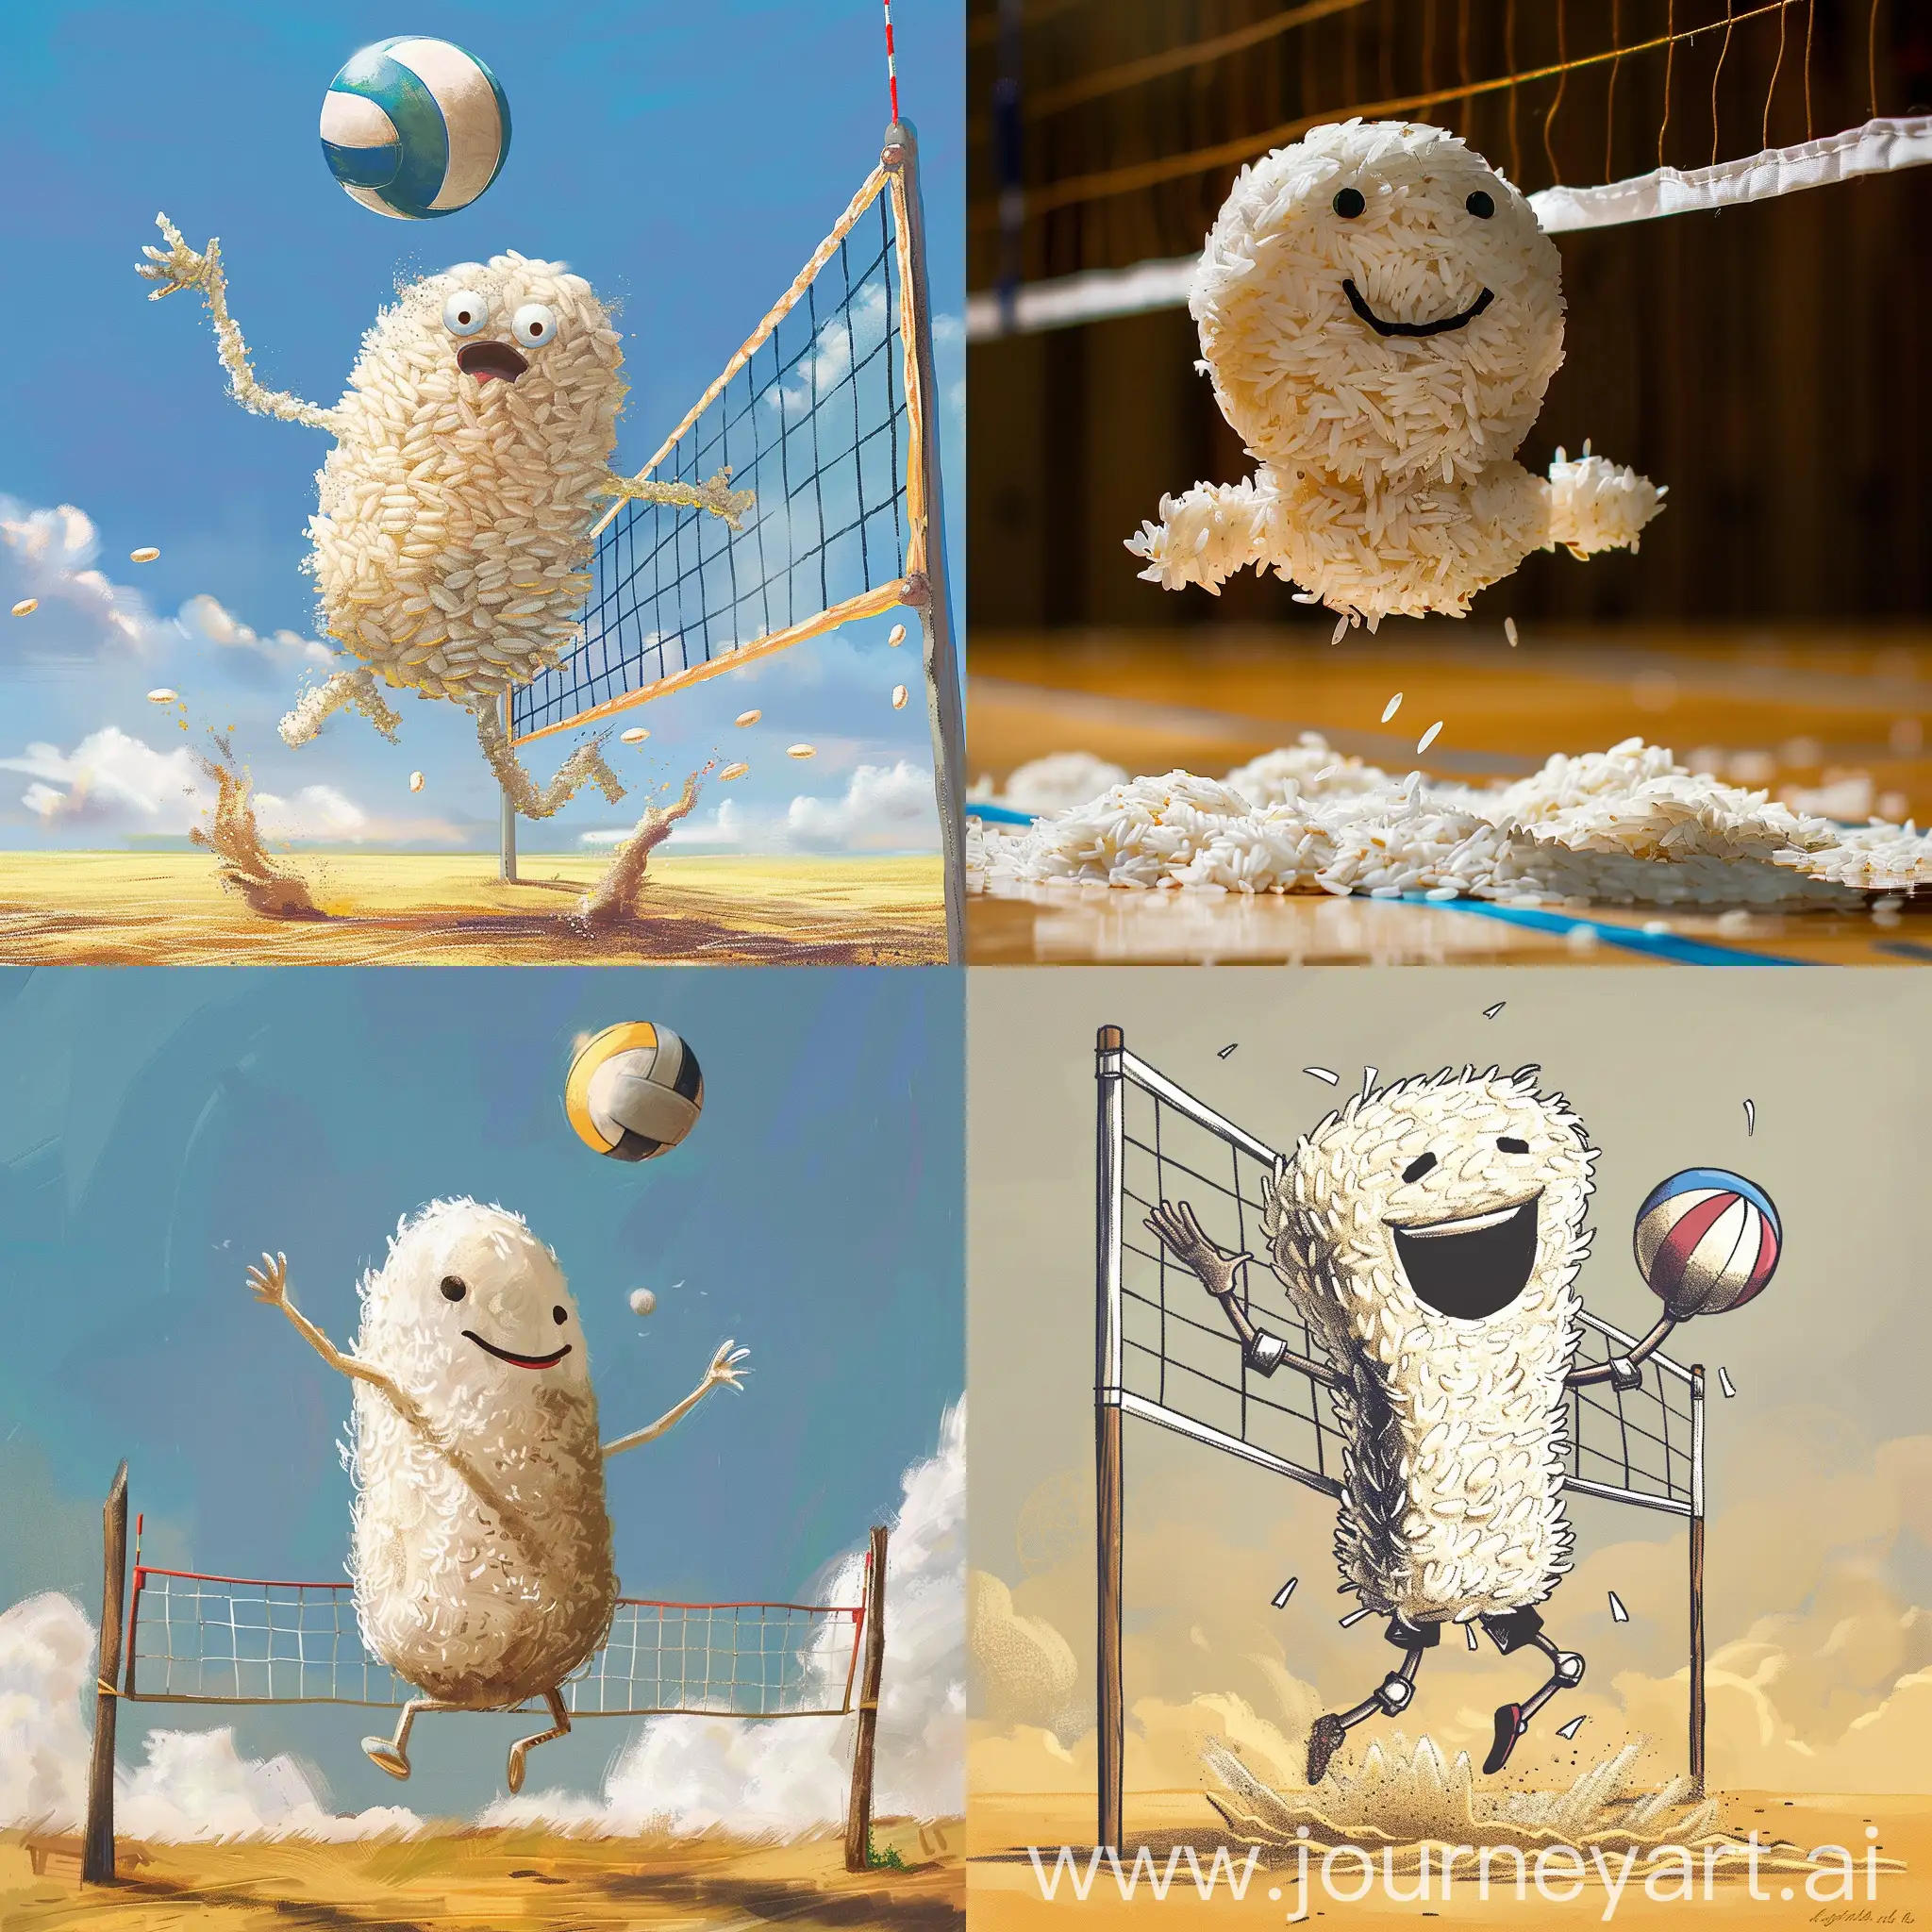 Playful-Rice-Volleyball-Match